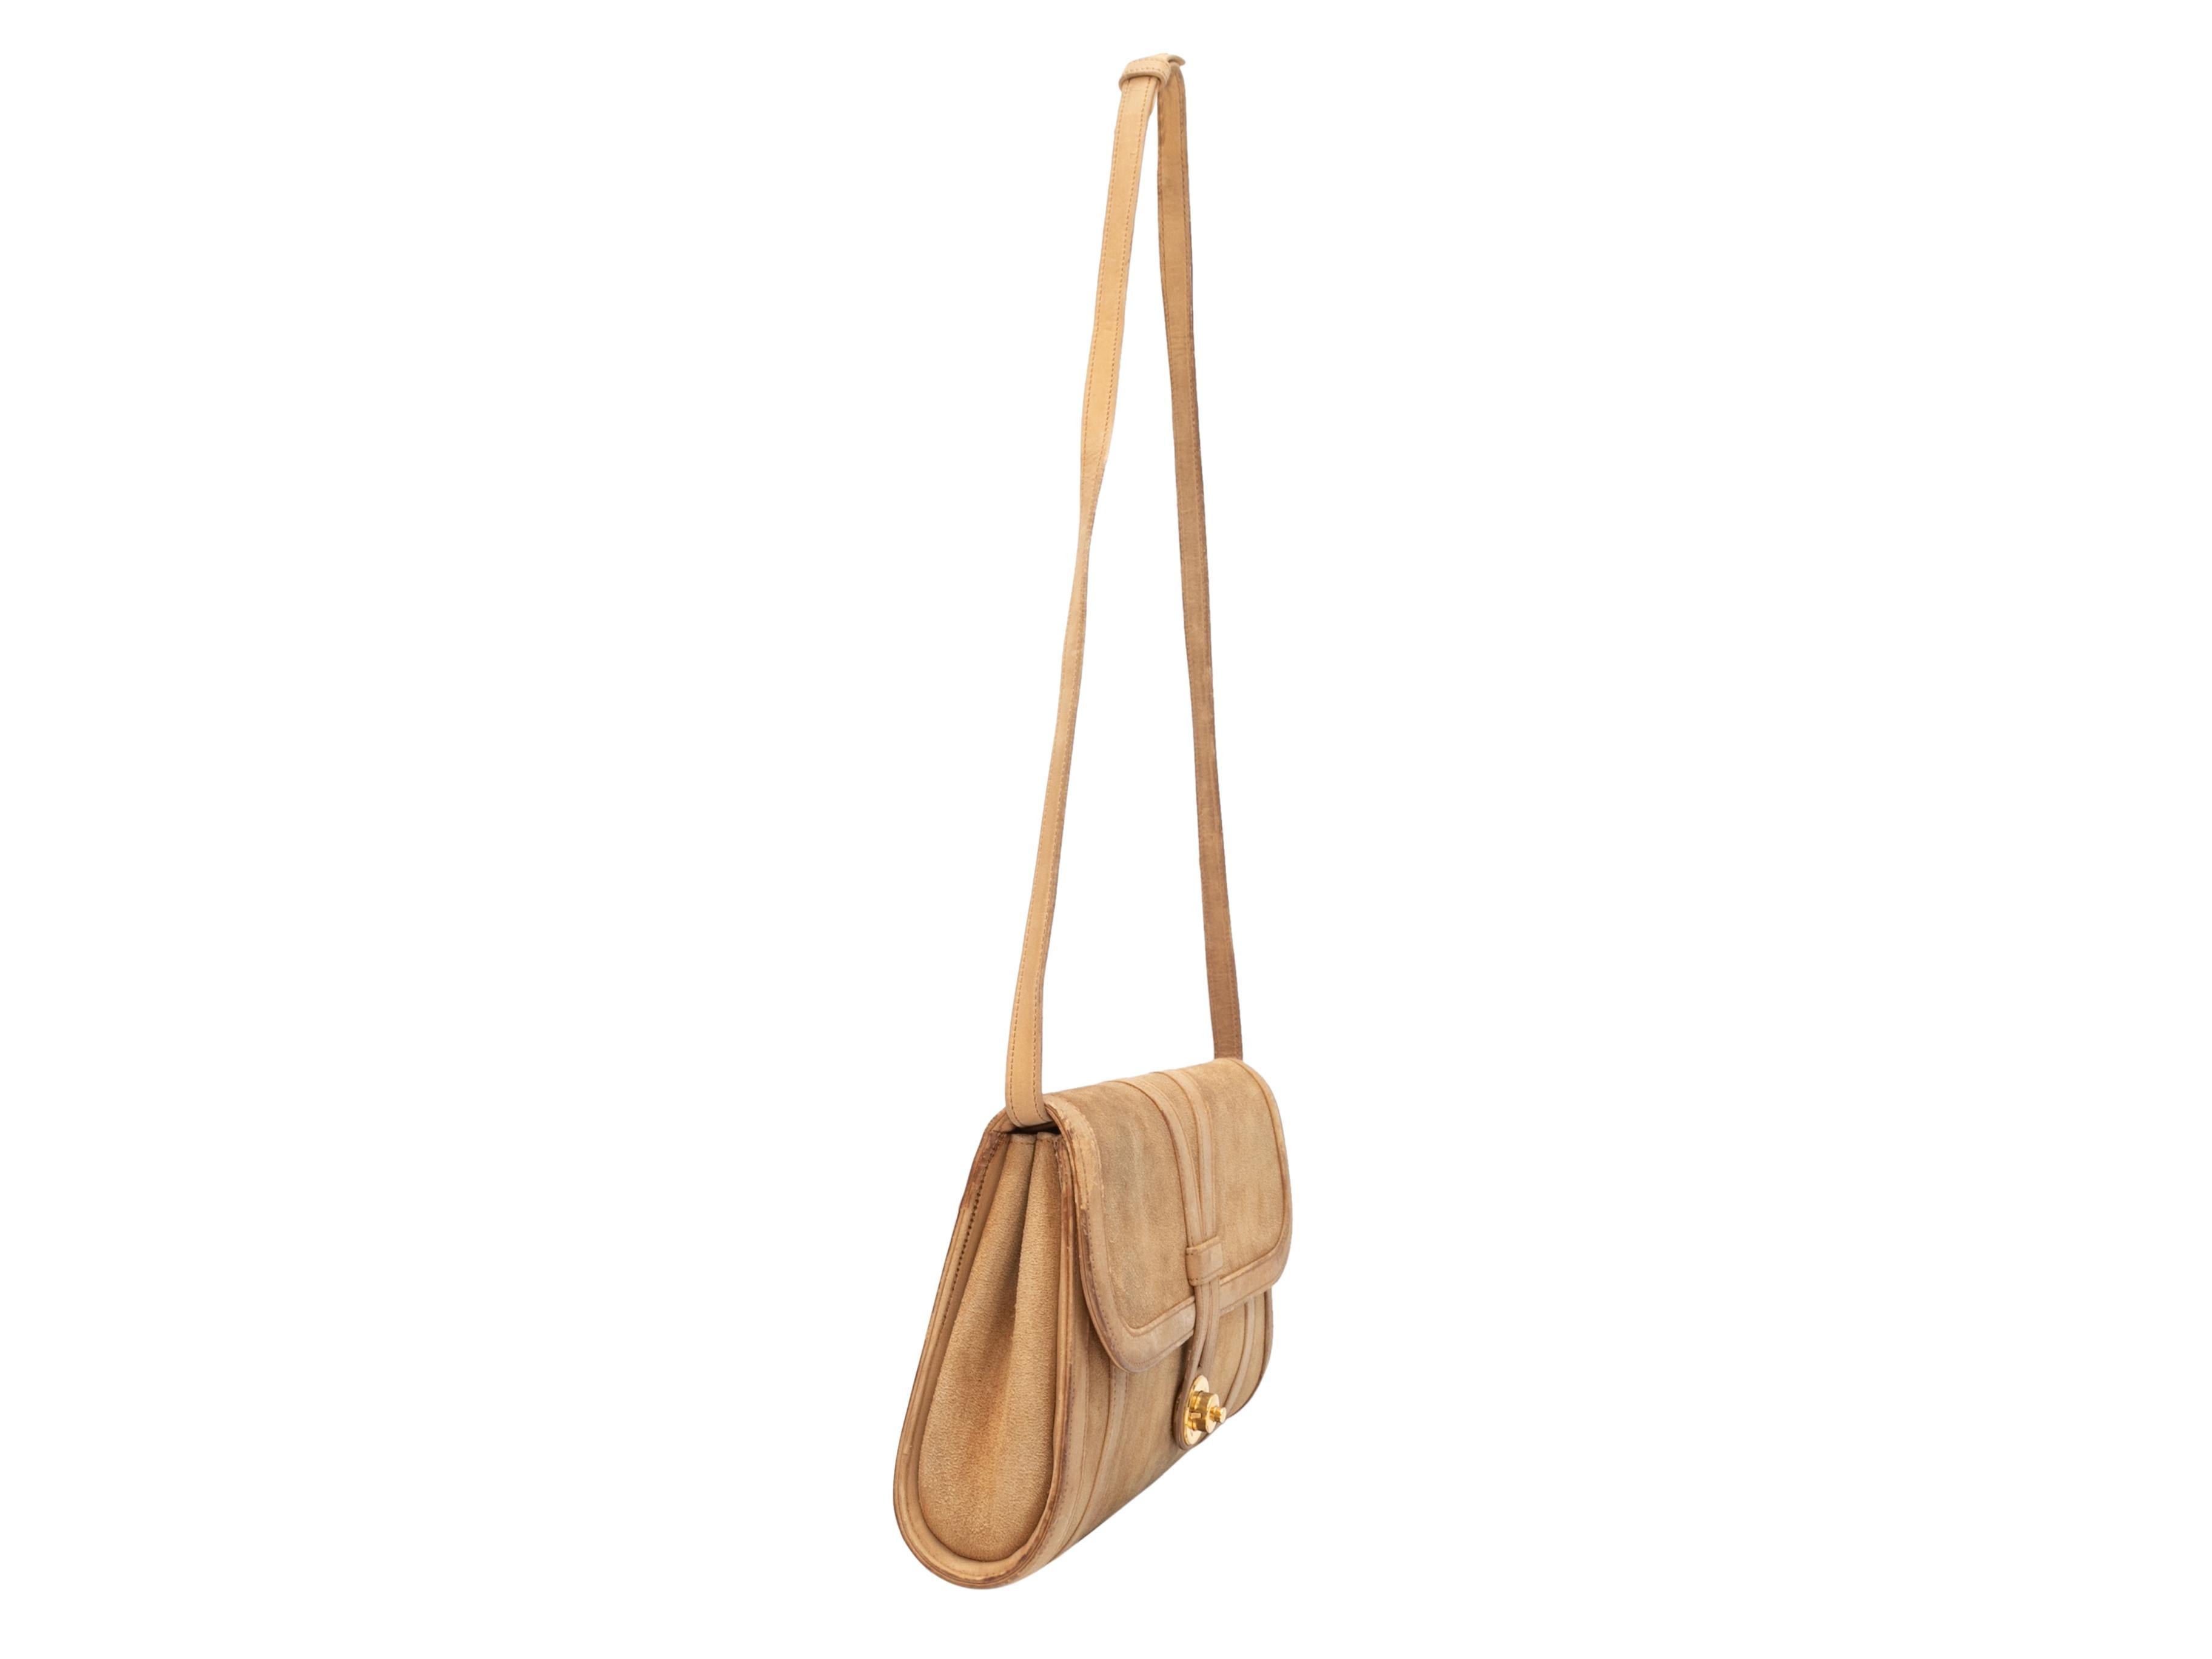 Vintage Tan Hermes 1970s Suede Shoulder Bag. This shoulder bag features a suede body, gold-tone hardware, a single flat shoulder strap, and a front clasp closure. 10.5